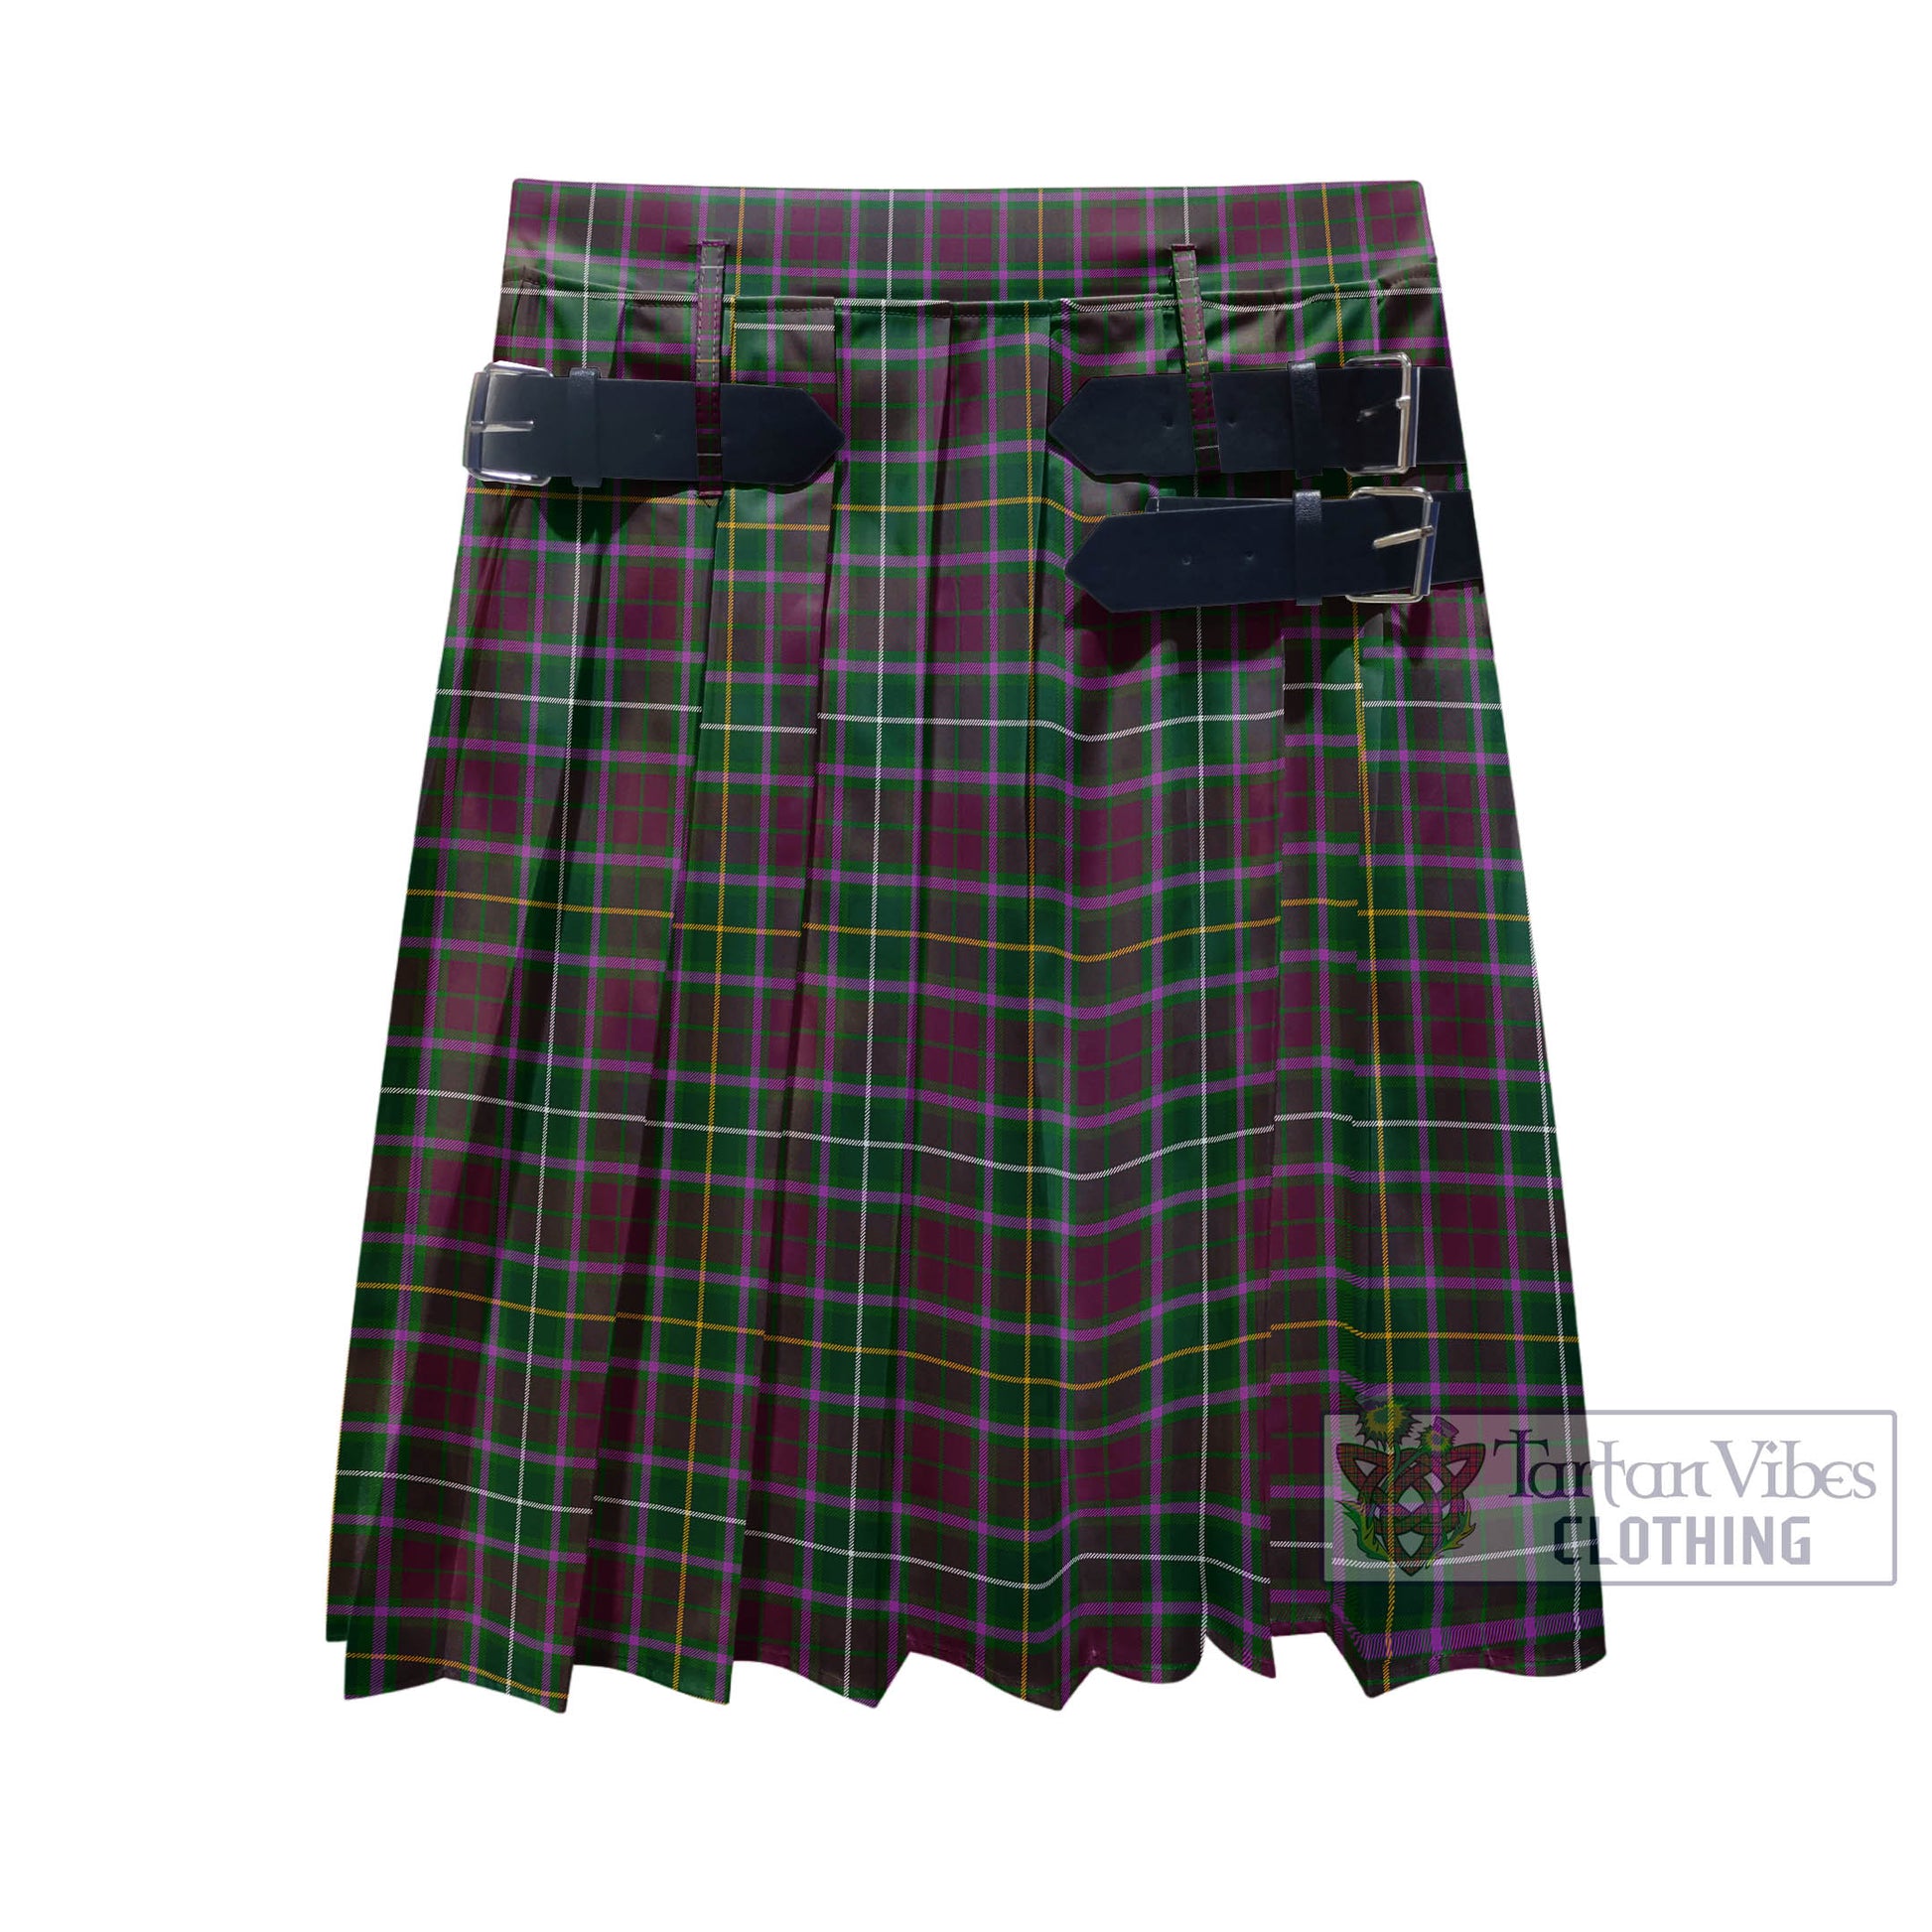 Tartan Vibes Clothing Crosbie Tartan Men's Pleated Skirt - Fashion Casual Retro Scottish Style